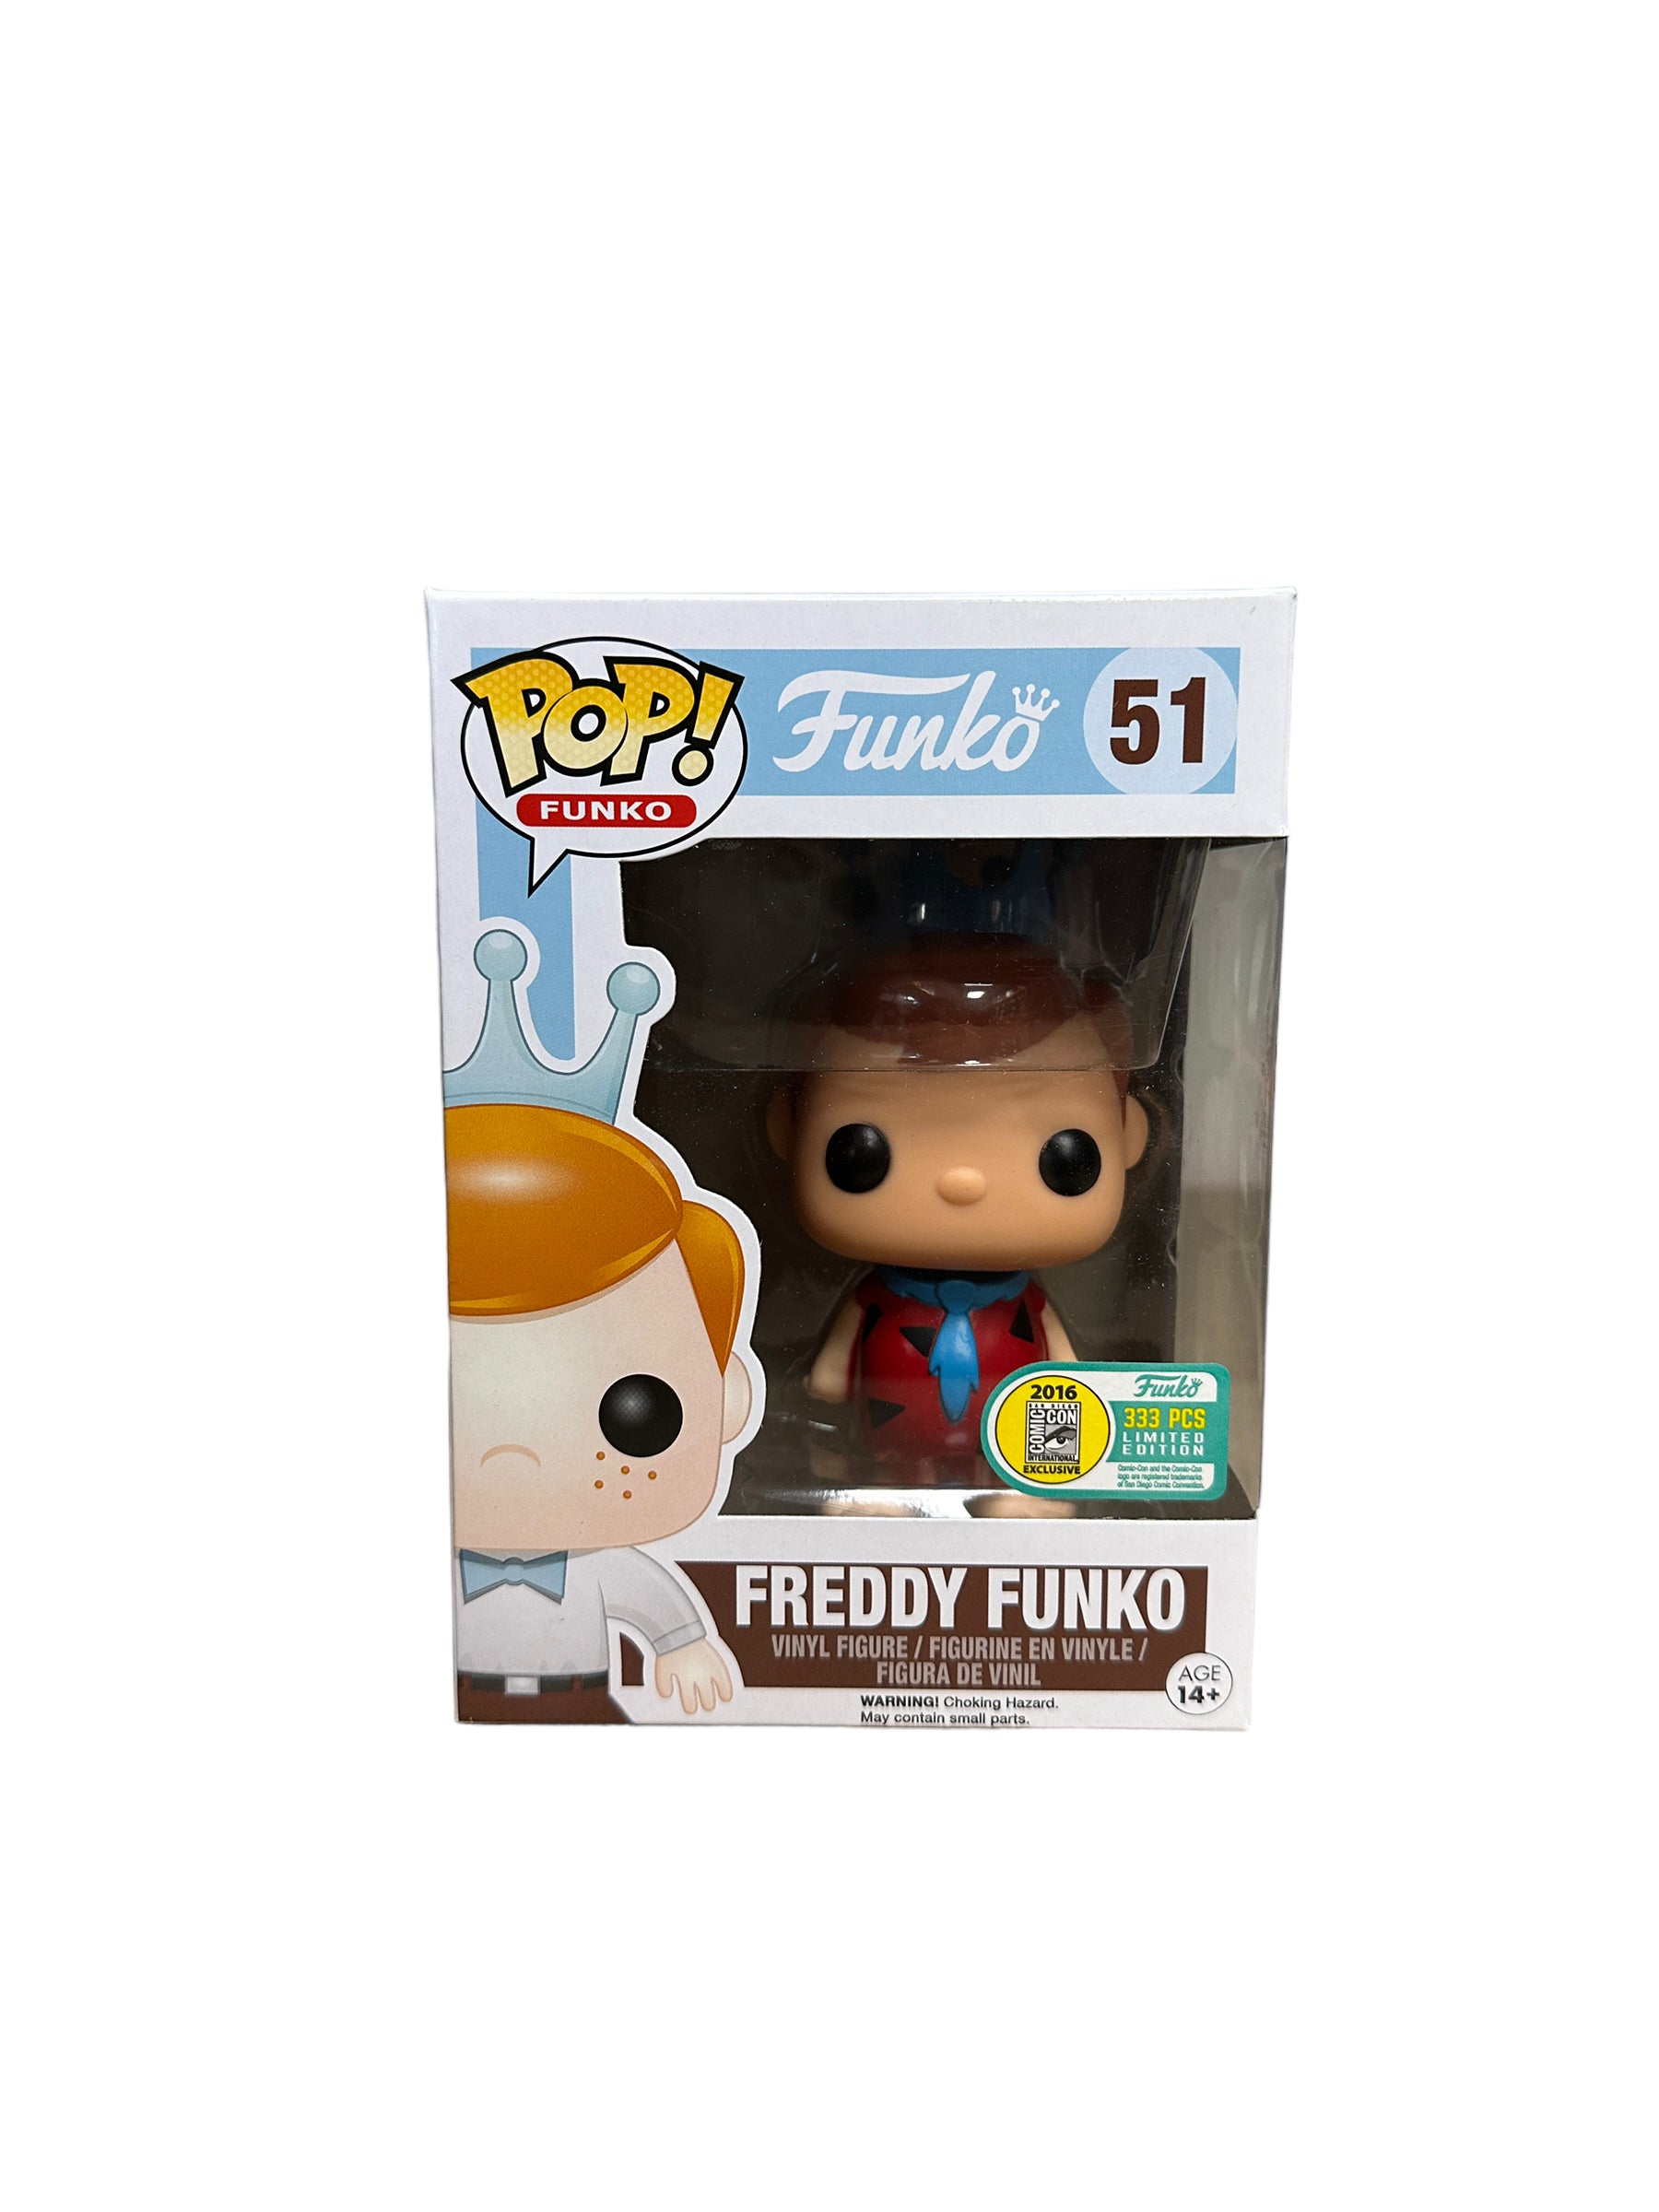 Freddy Funko as Fred Flintstone #51 Funko Pop! - SDCC 2016 Exclusive LE333 Pcs - Condition 8.5/10